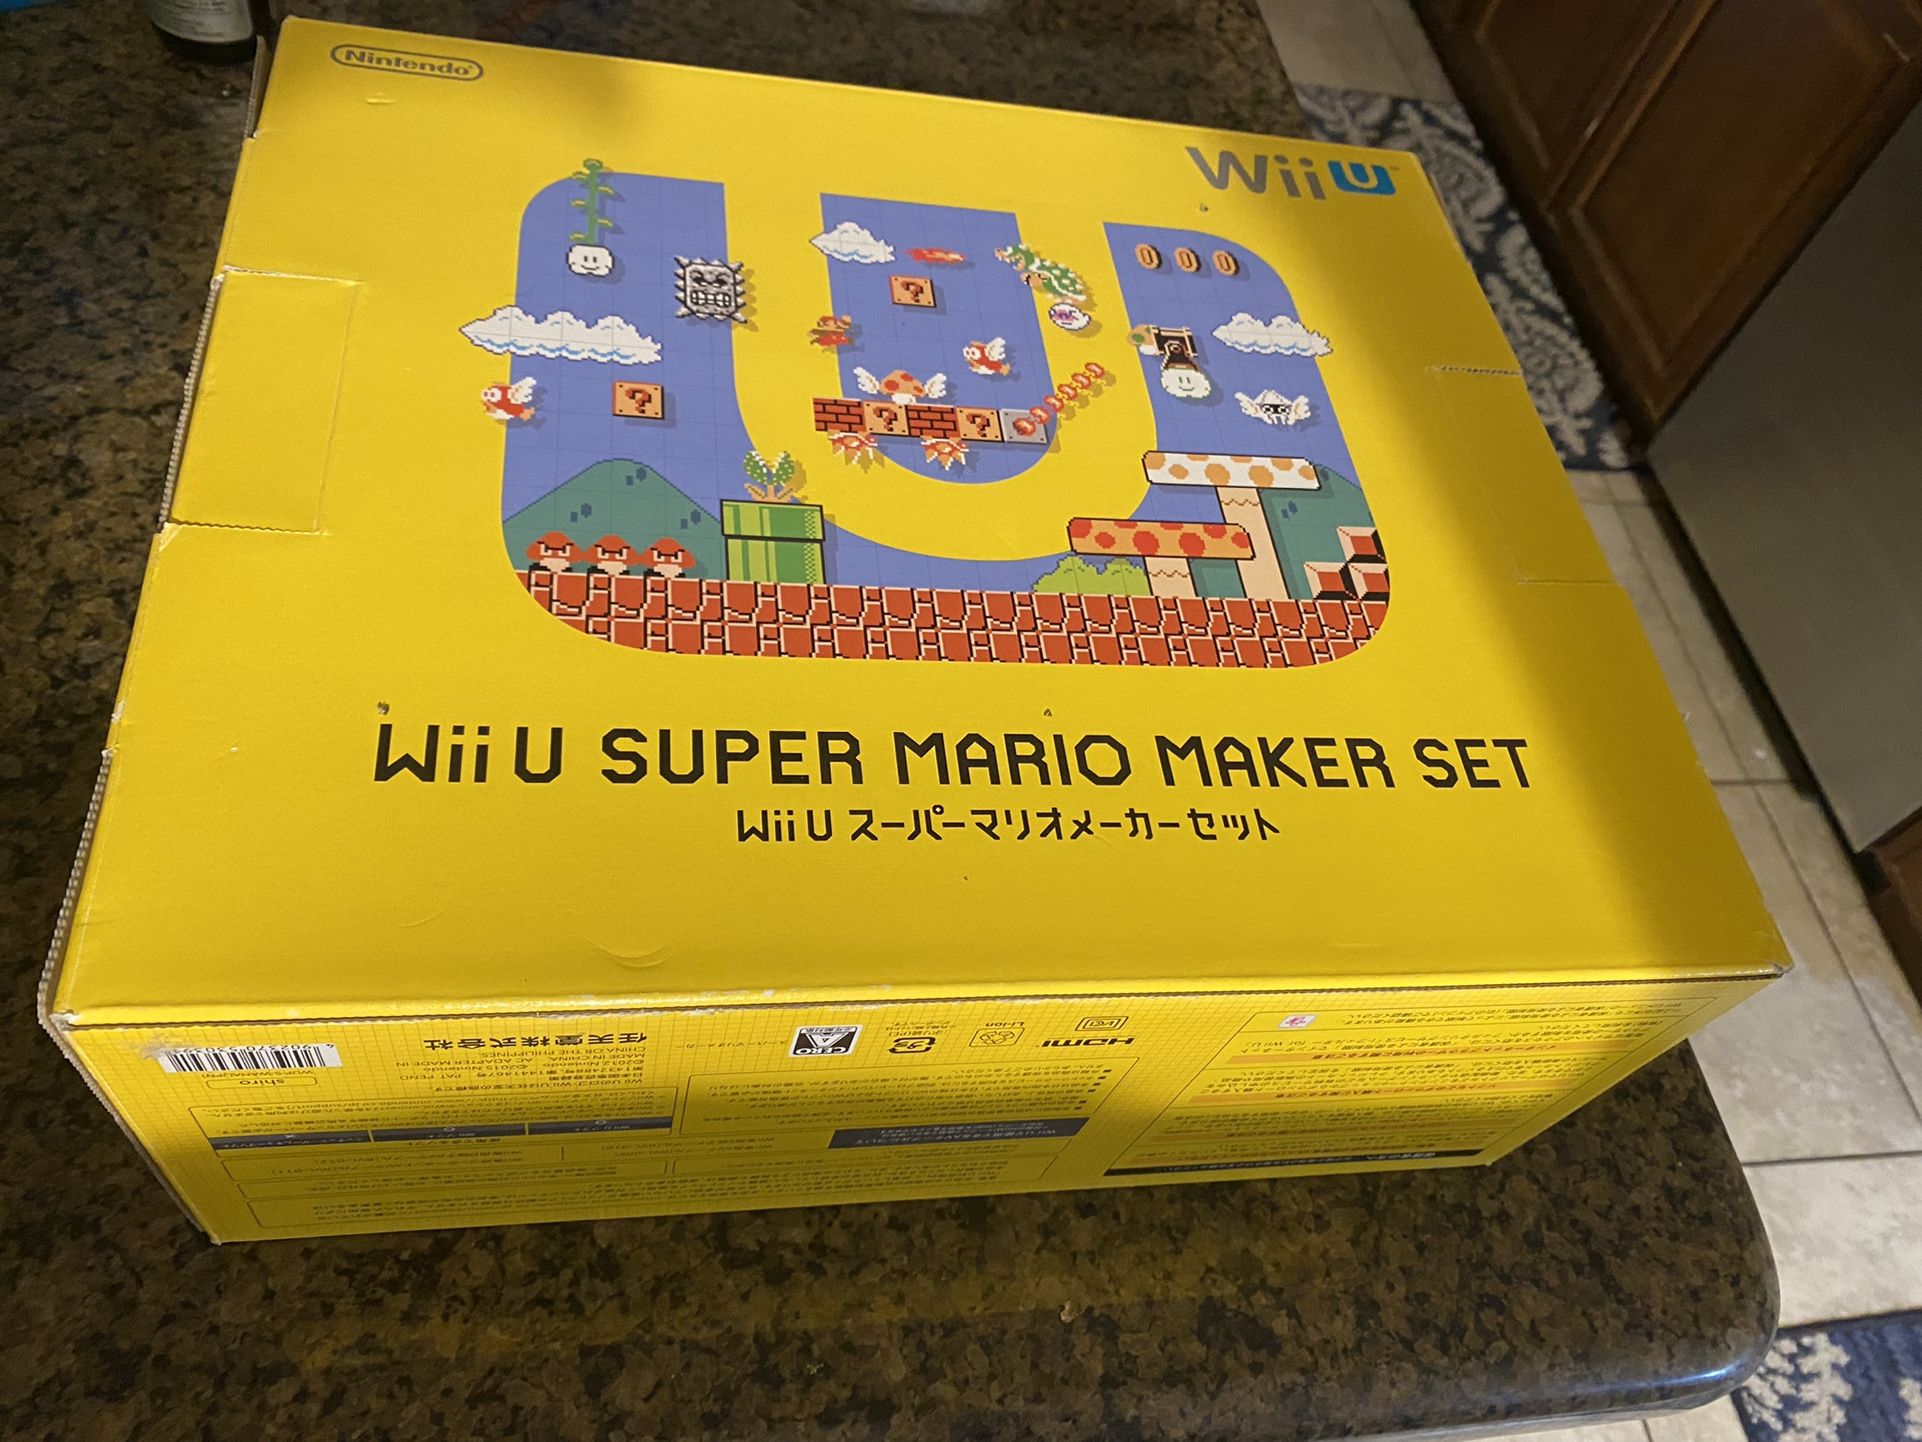 Super Mario Maker Edition - Nintendo WiiU (White)